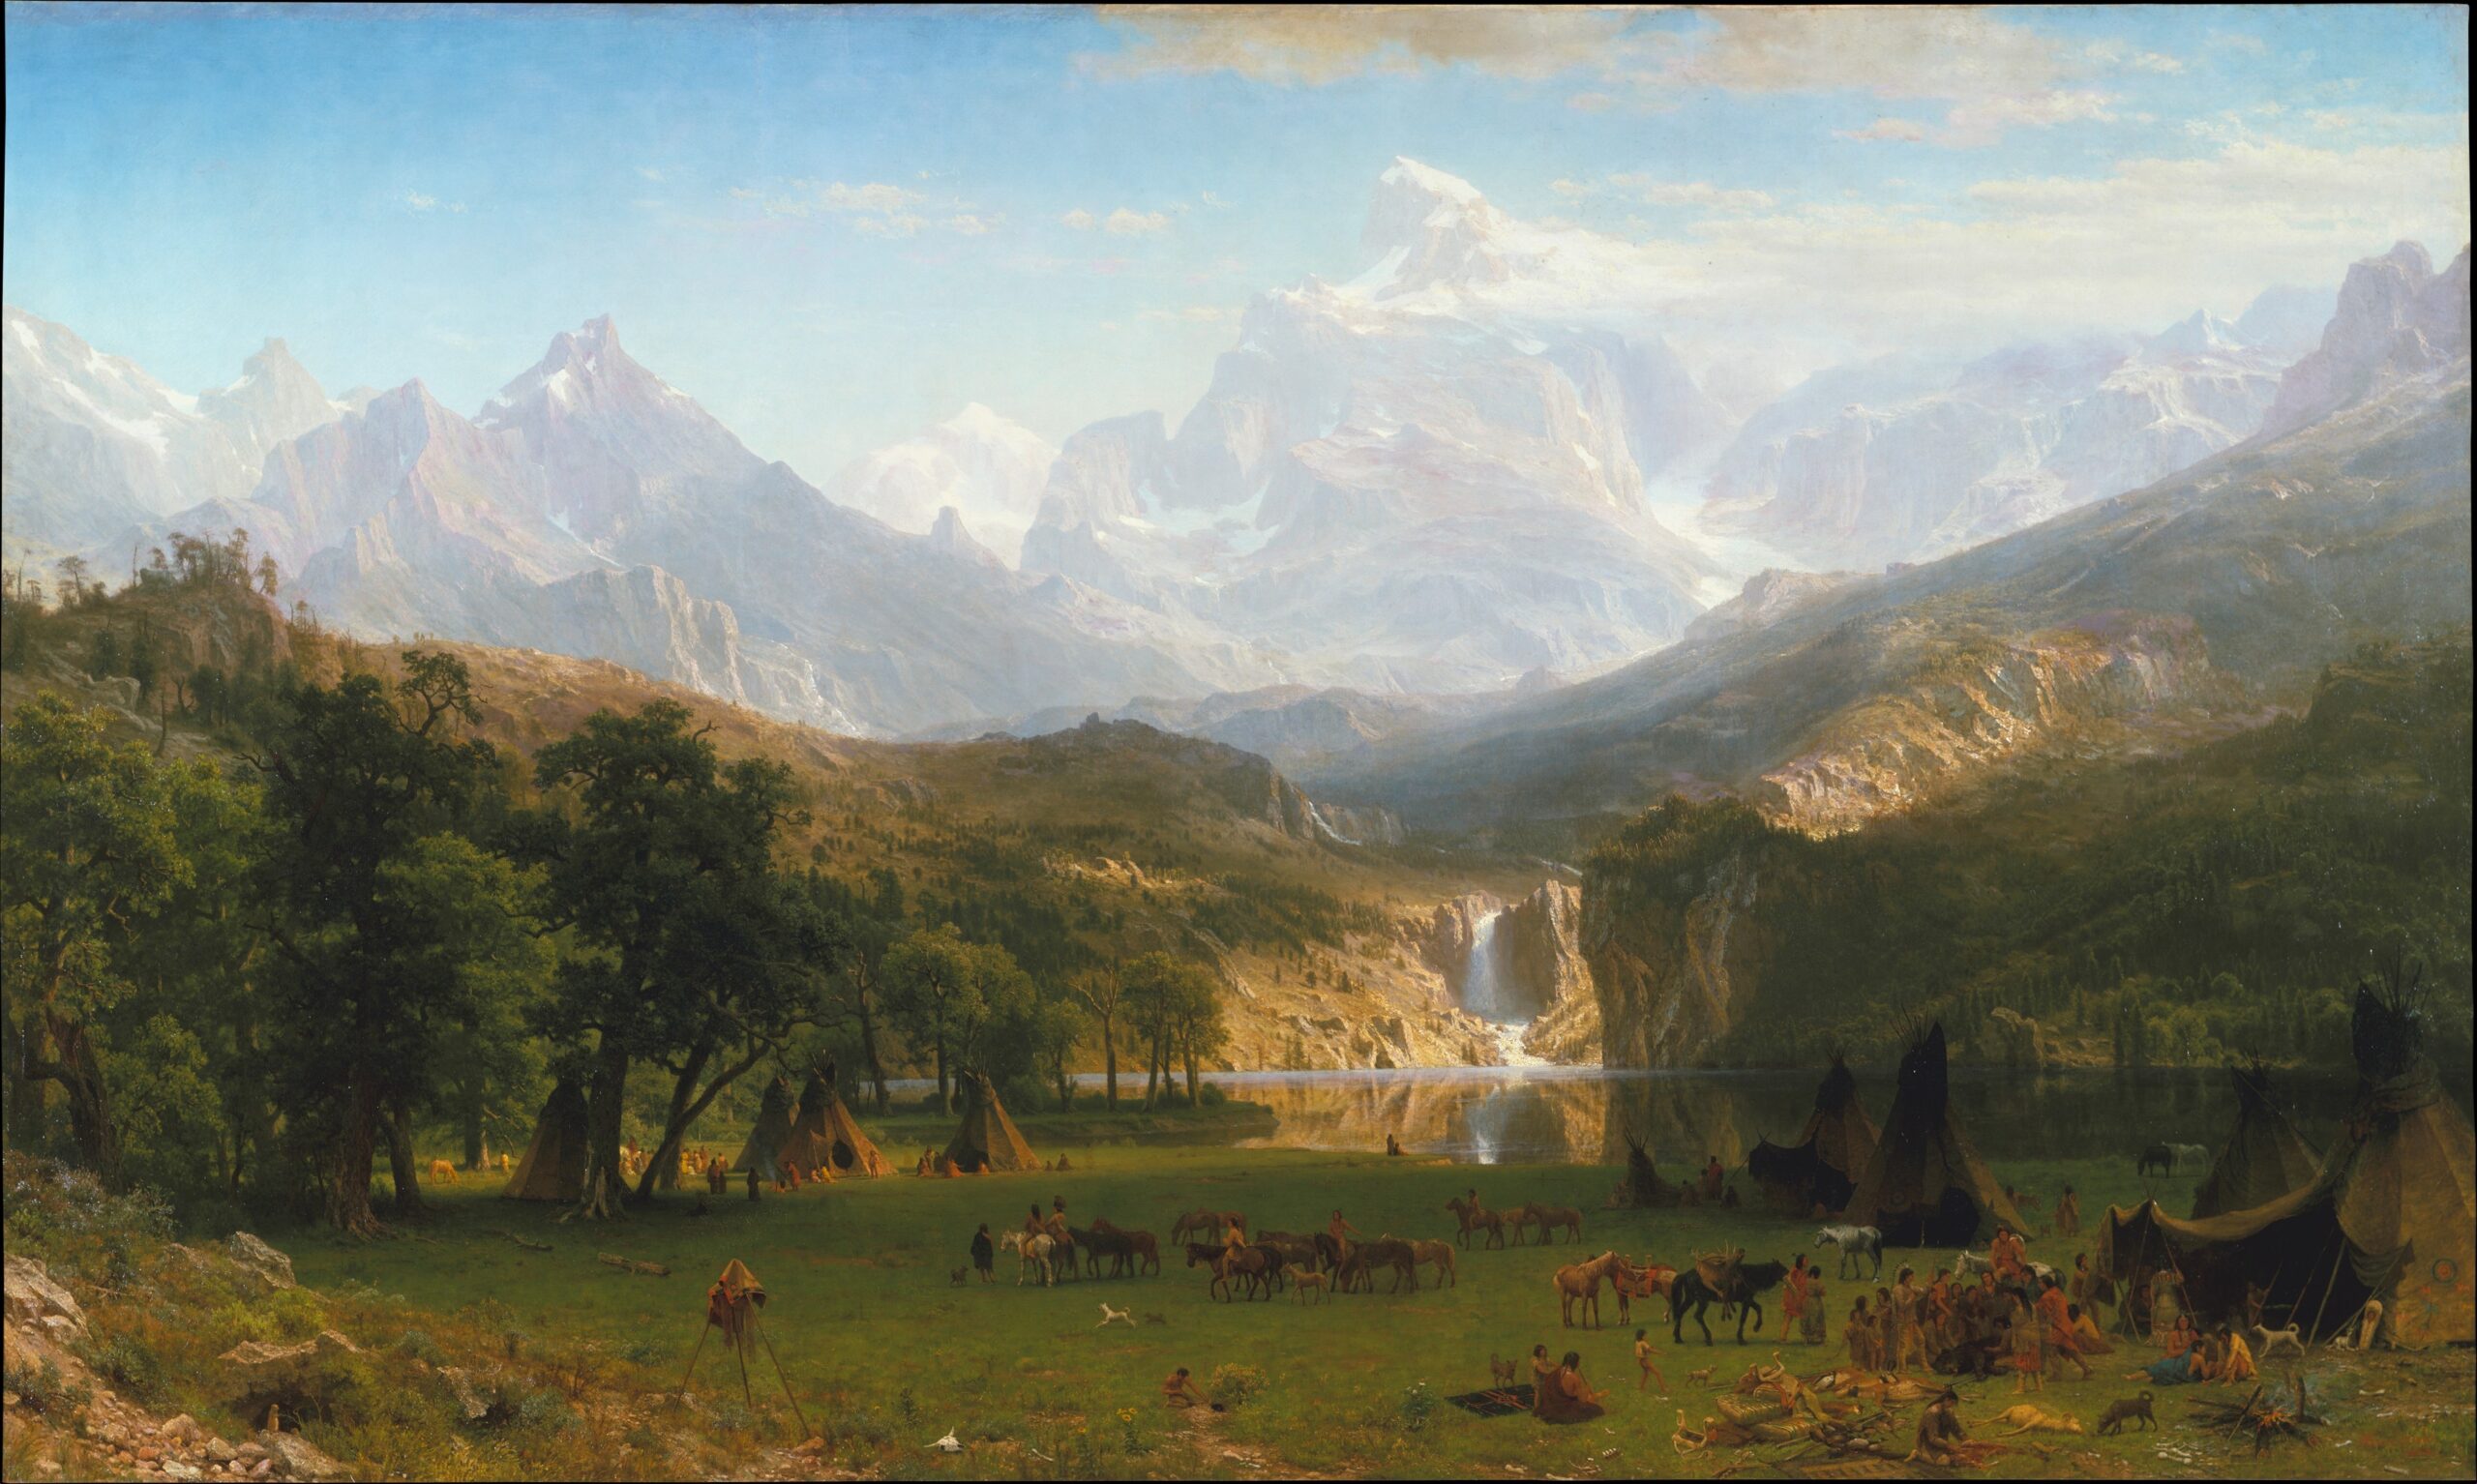 Albert Bierstadt, "The Rocky Mountains, Lander's Peak," 1863, oil on canvas, 73 1/2 x 120 3/4 in., Rogers Fund, 1907